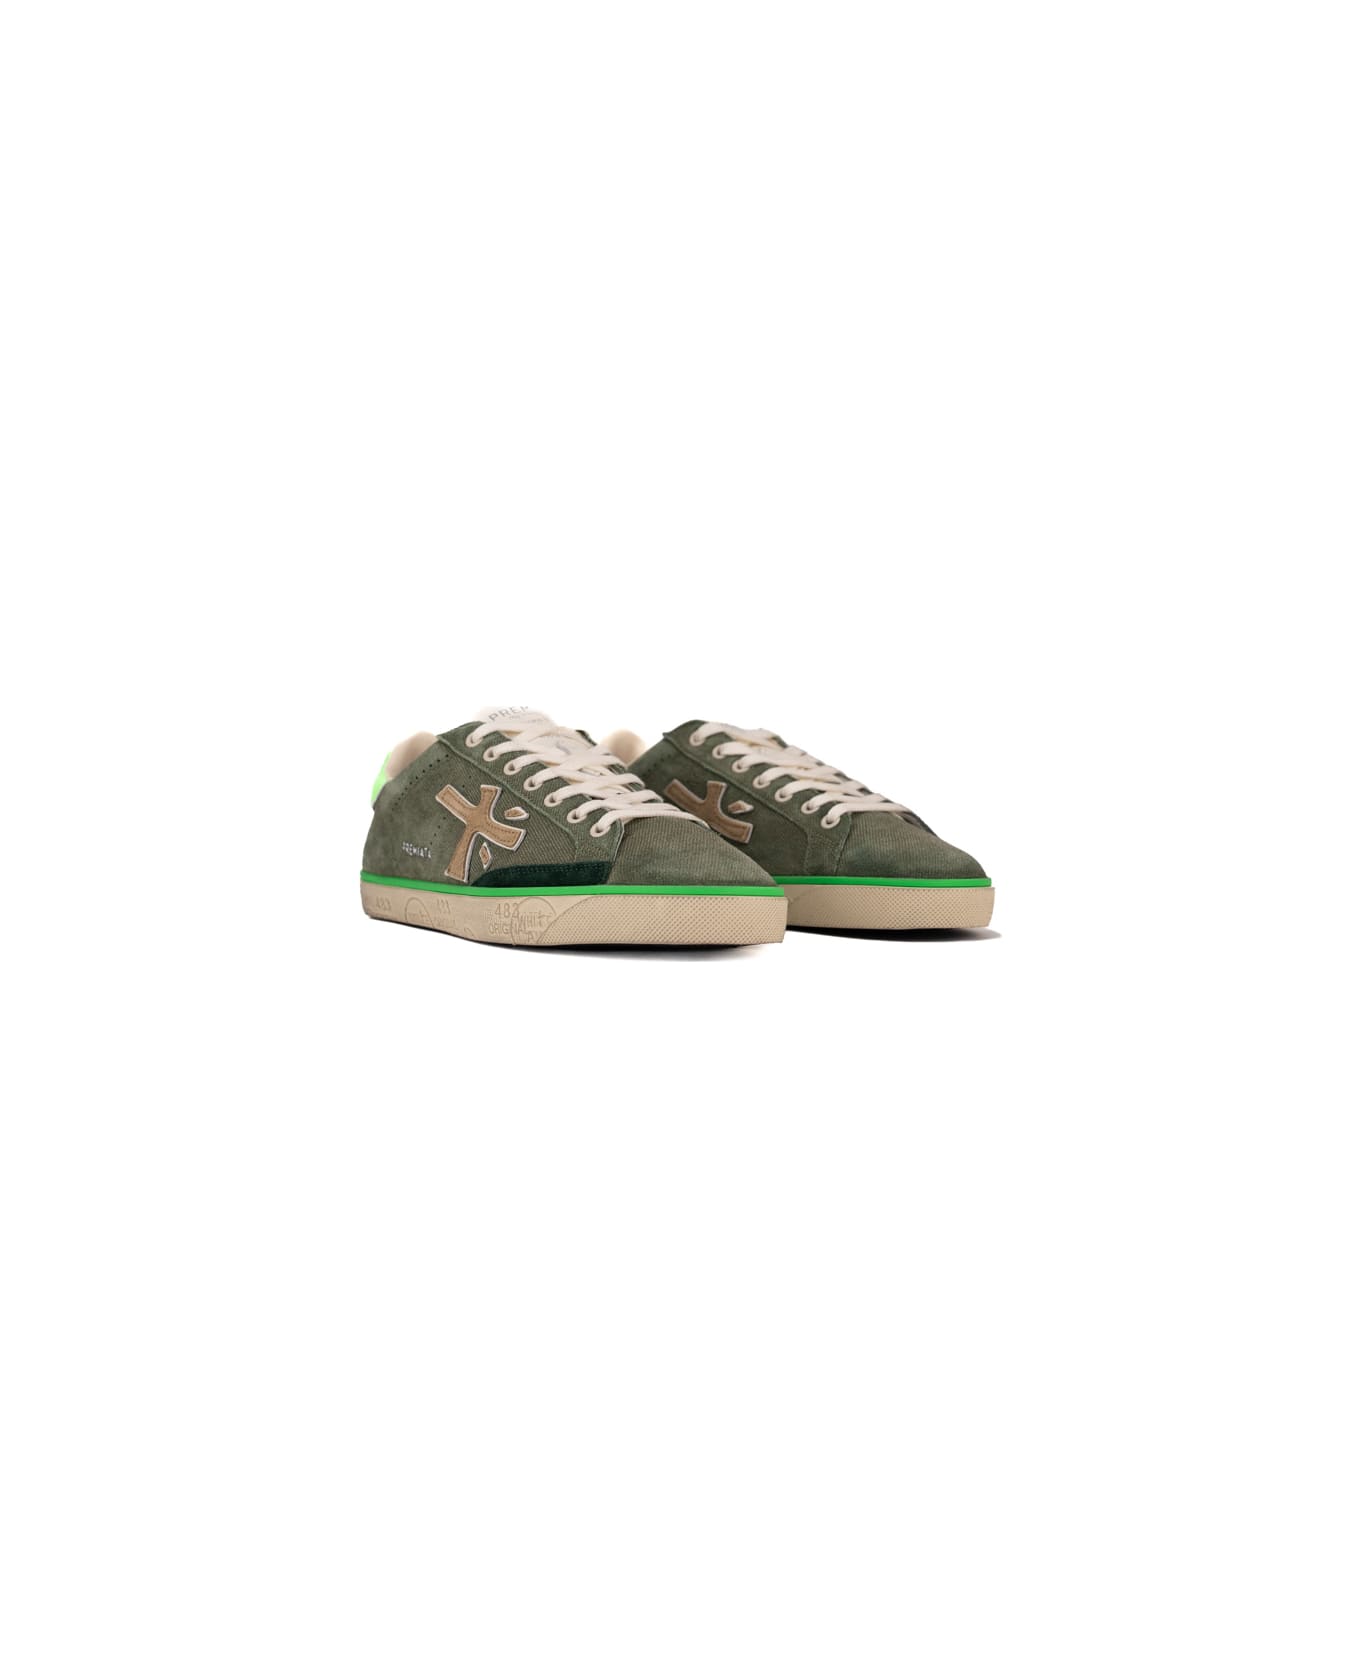 Premiata Steven 6644 Sneakers - Verde